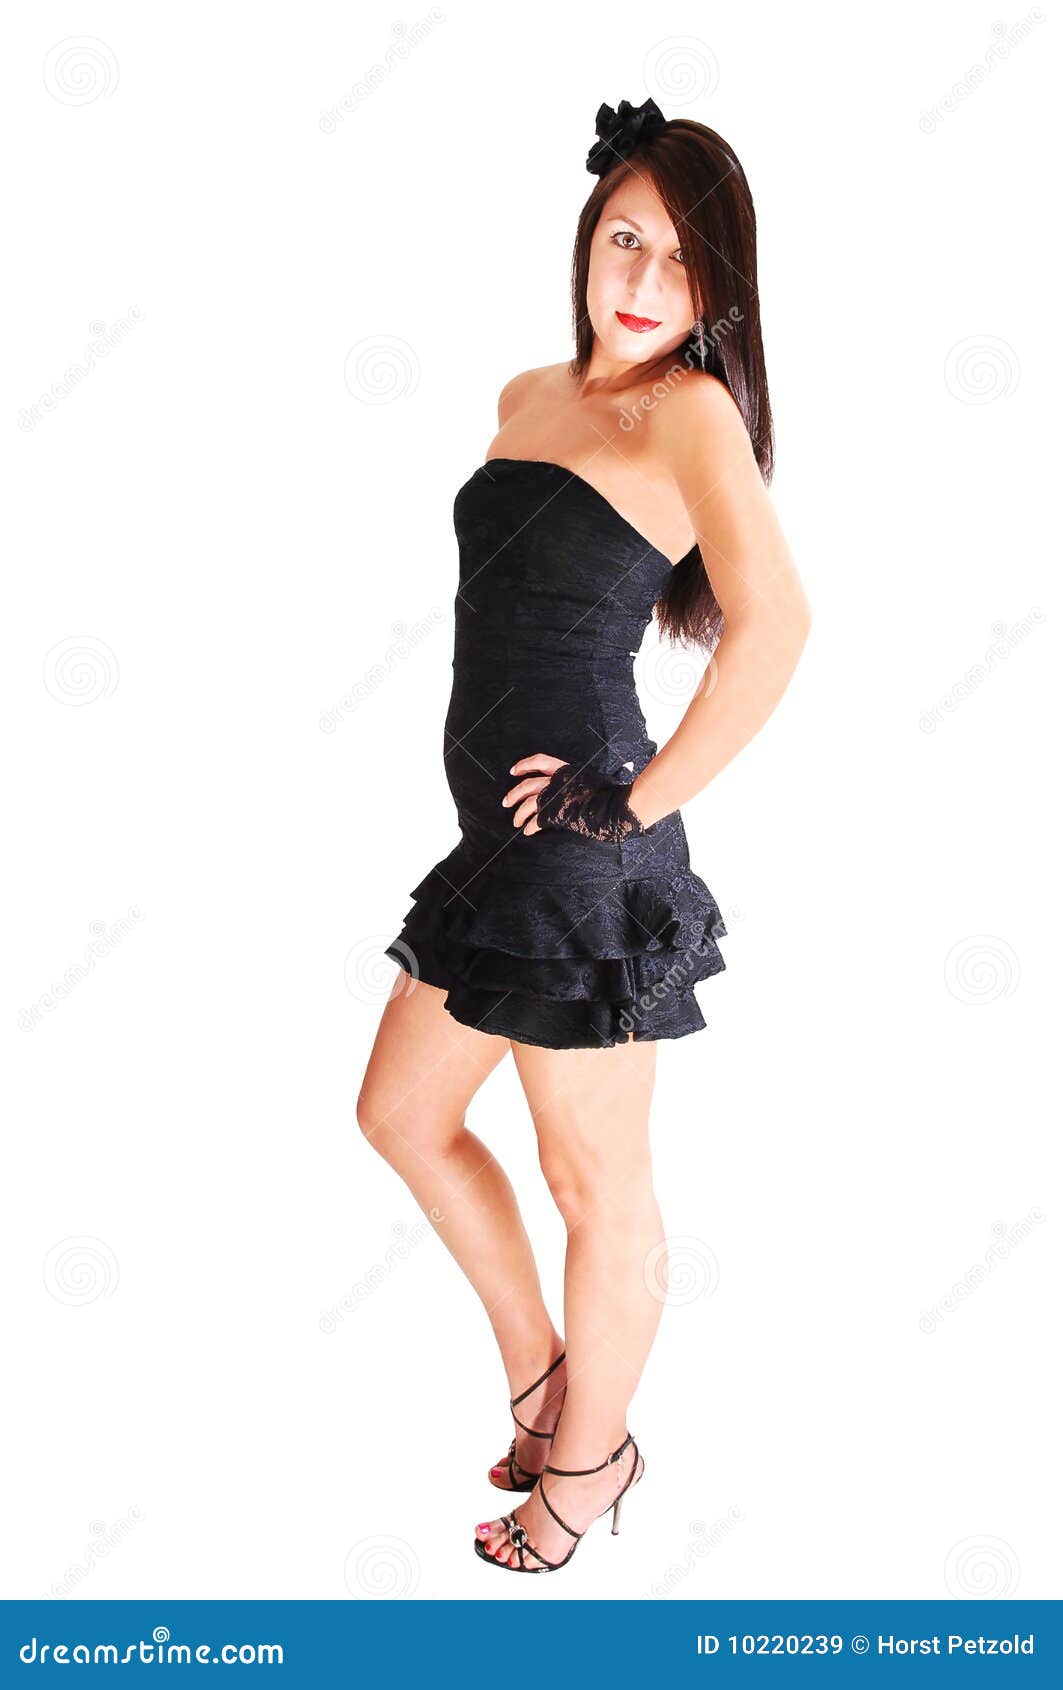 Pretty Girl In Black Dress. Stock Image - Image of pose, long: 10220239